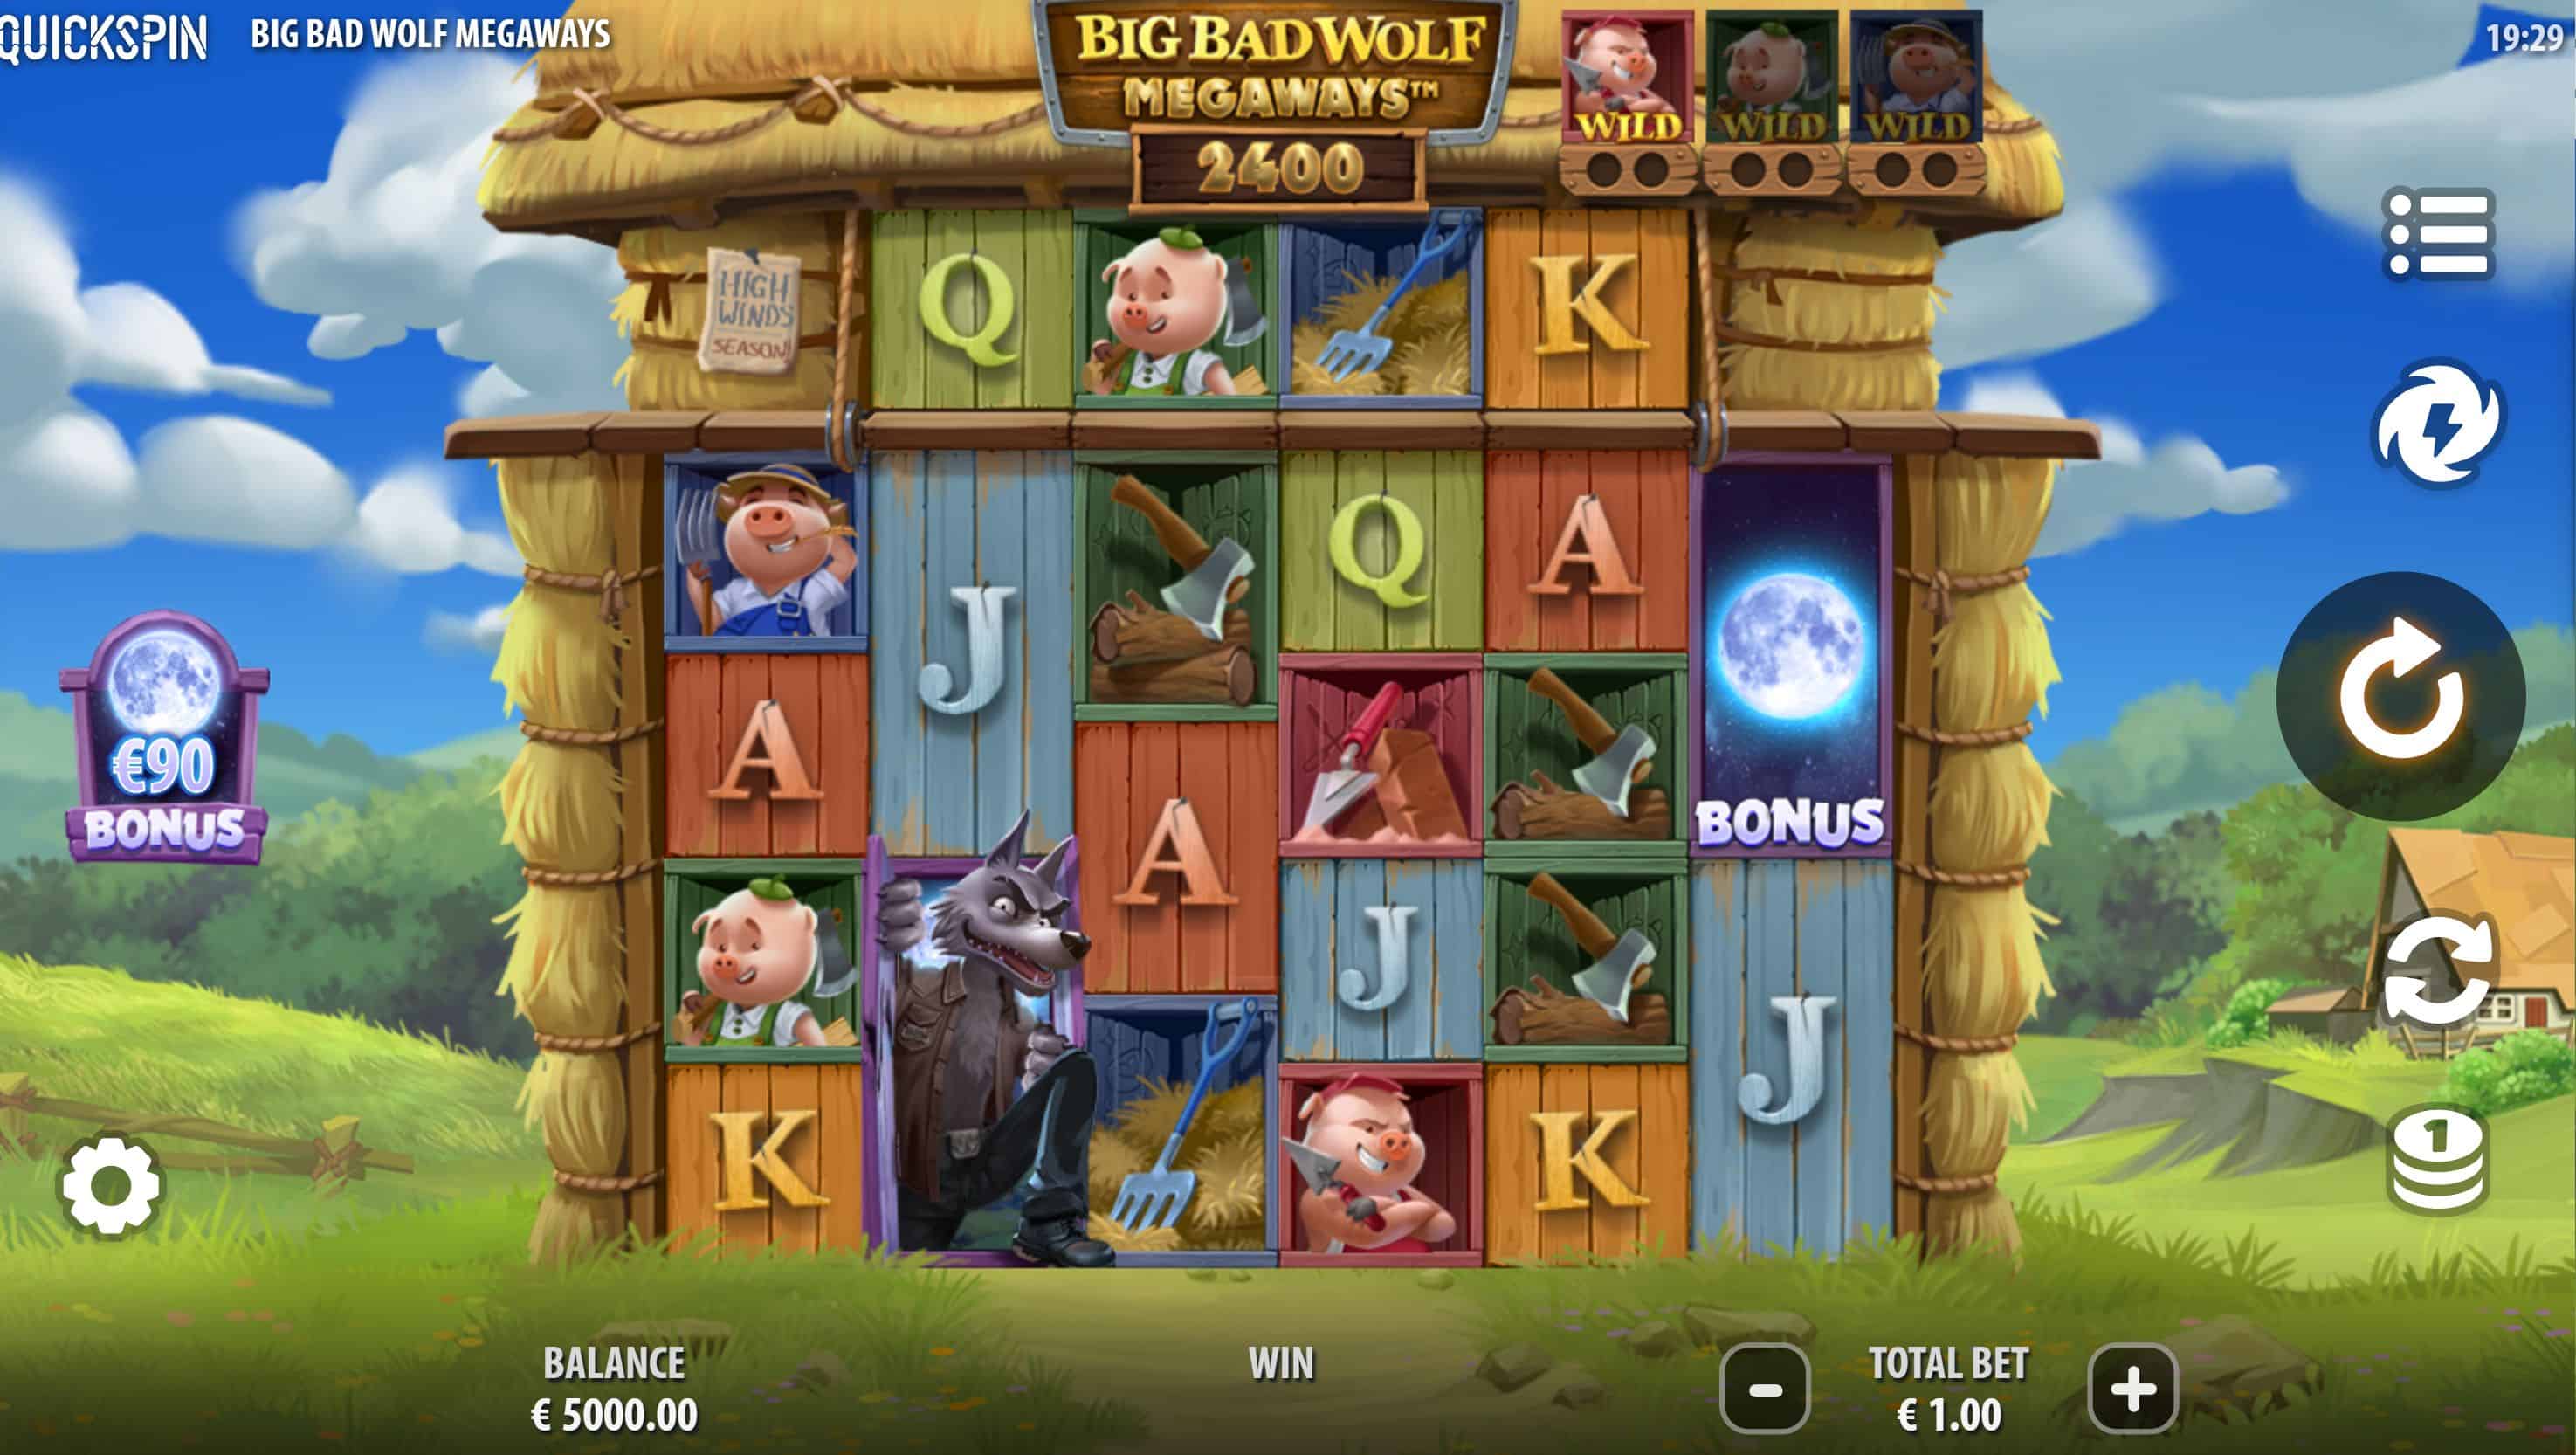 Big Bad Wolf Megaways Slot Game Free Play at Casino Ireland 01